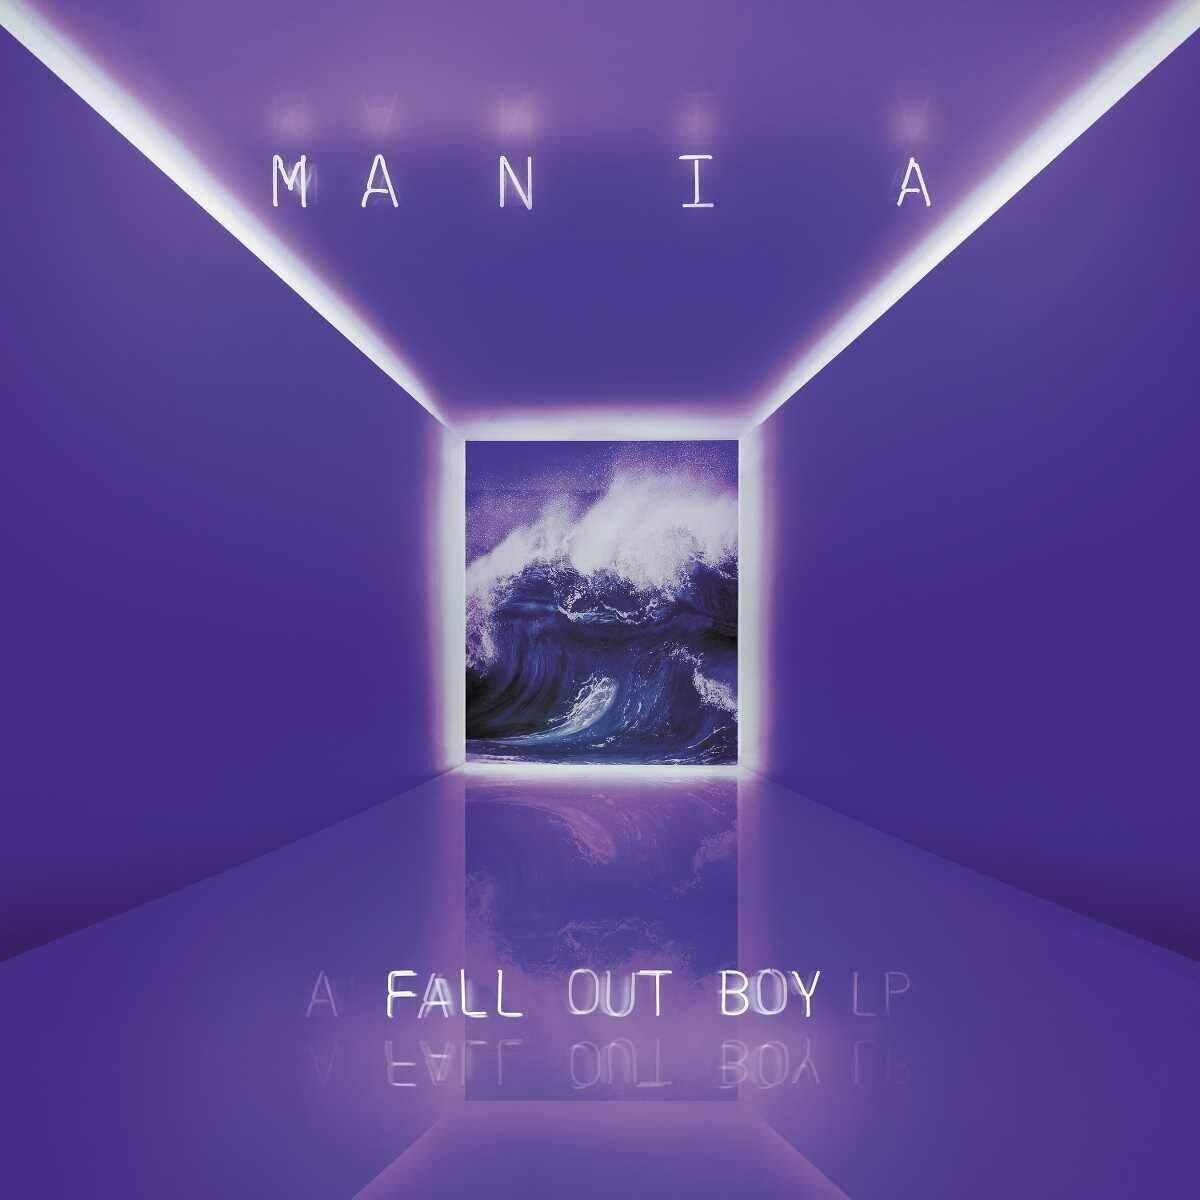 Vinylskiva Fall Out Boy - Mania (LP)